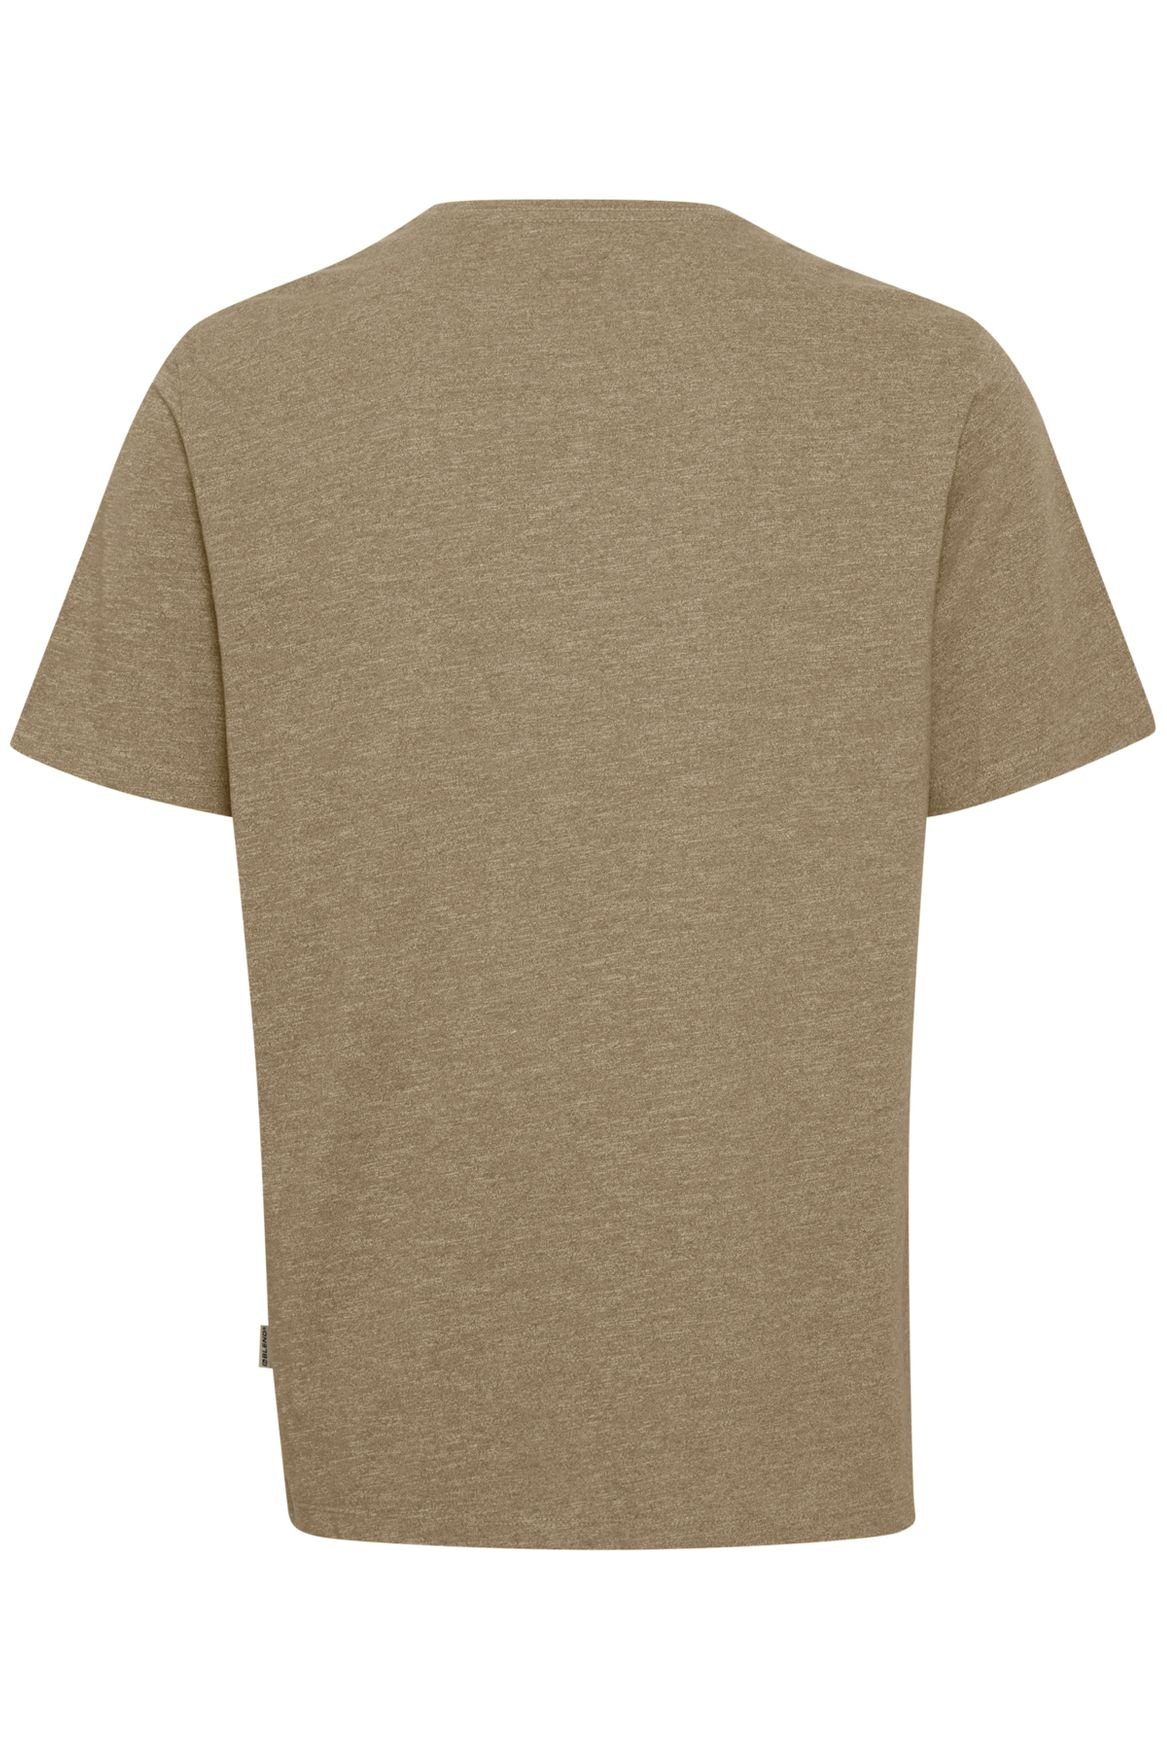 Kurzarm BHWilton Blend Rundhals T-Shirt Beige T-Shirt 5030 Shirt in Stretch